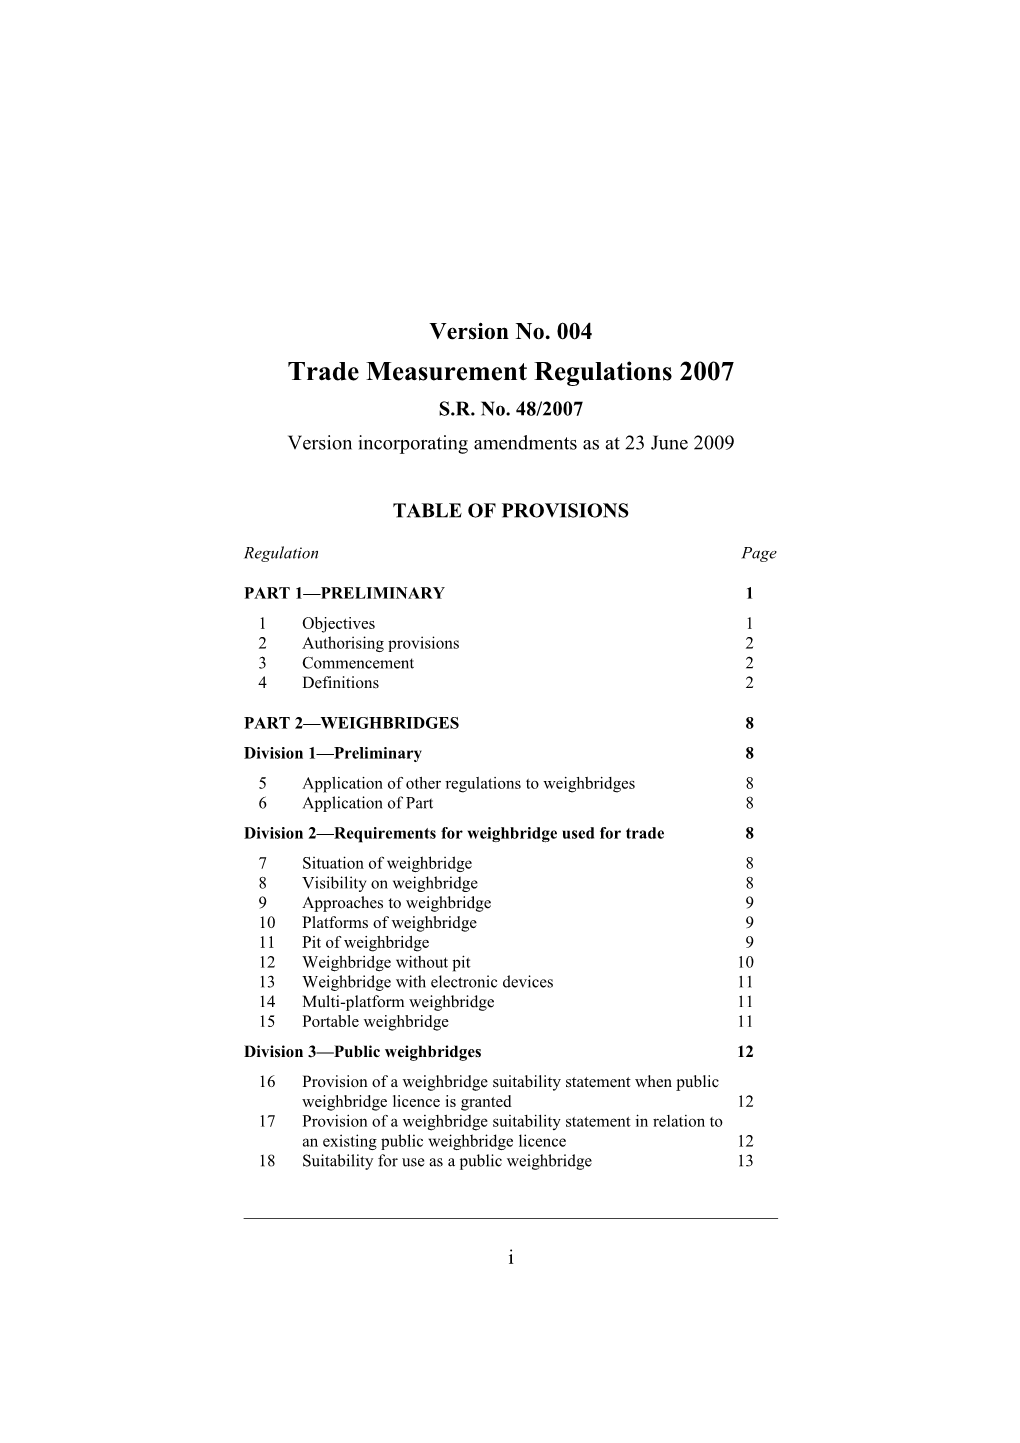 Trade Measurement Regulations 2007